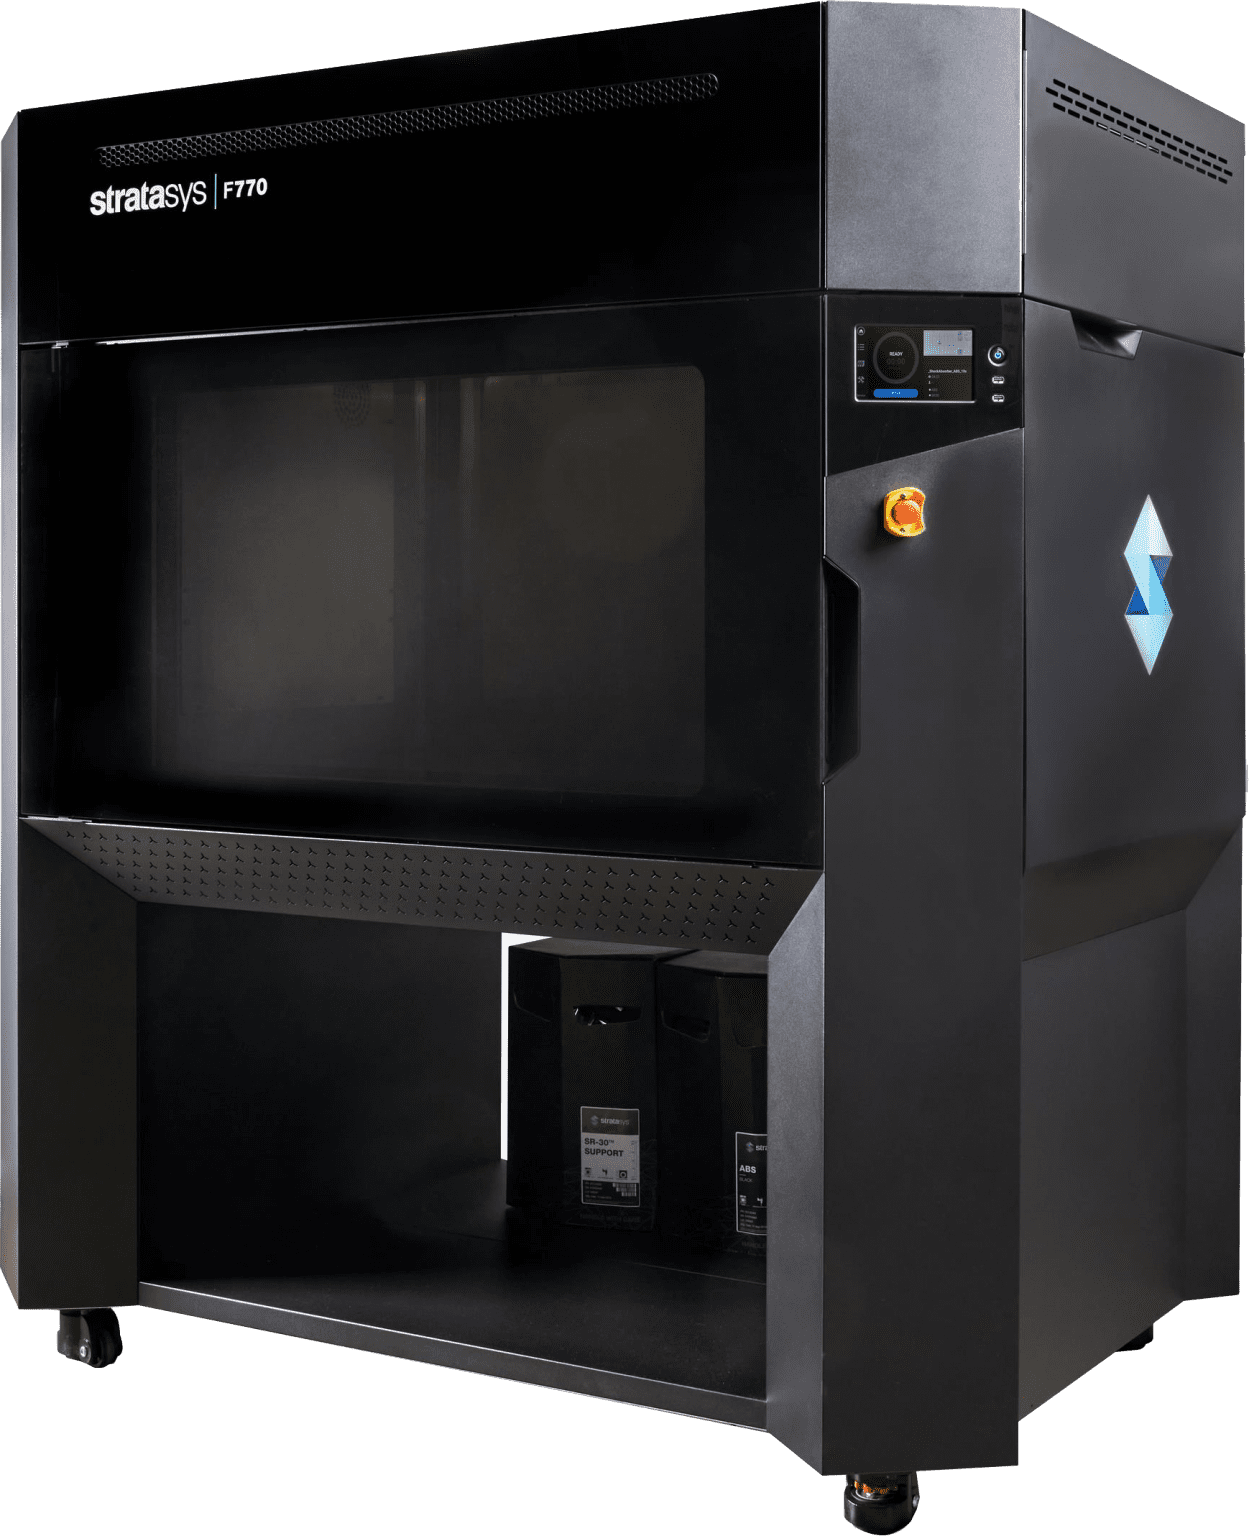 Stratasys F770 3D Printers - F770 Printer Image 1249x1536